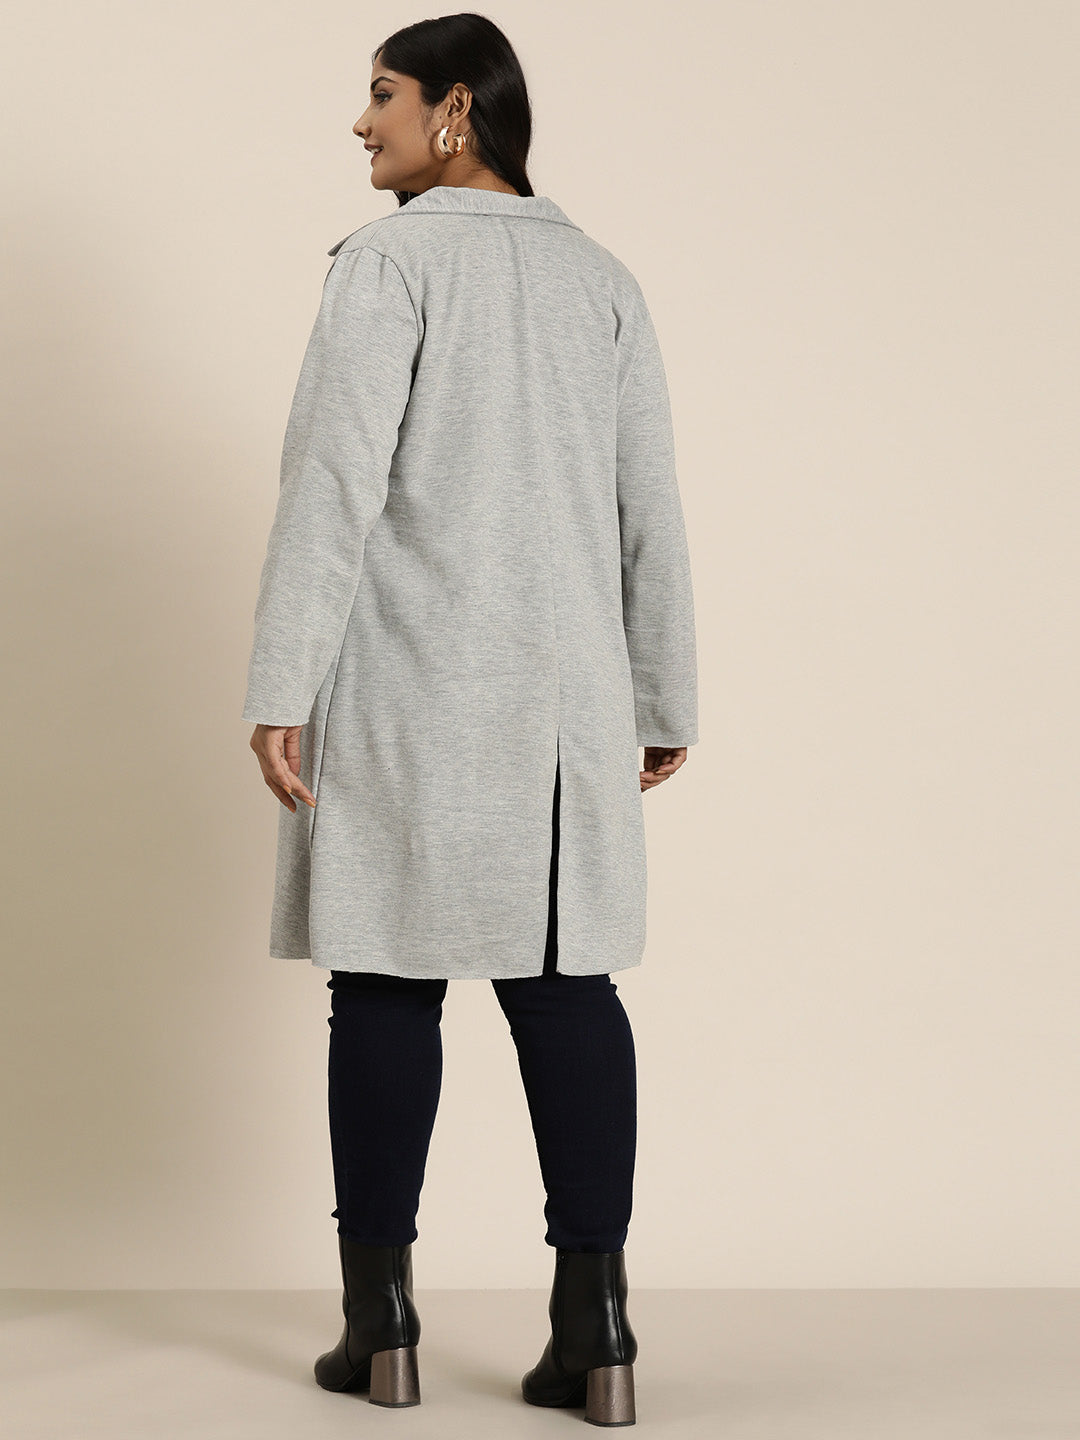 Solid light gray fleece long jacket